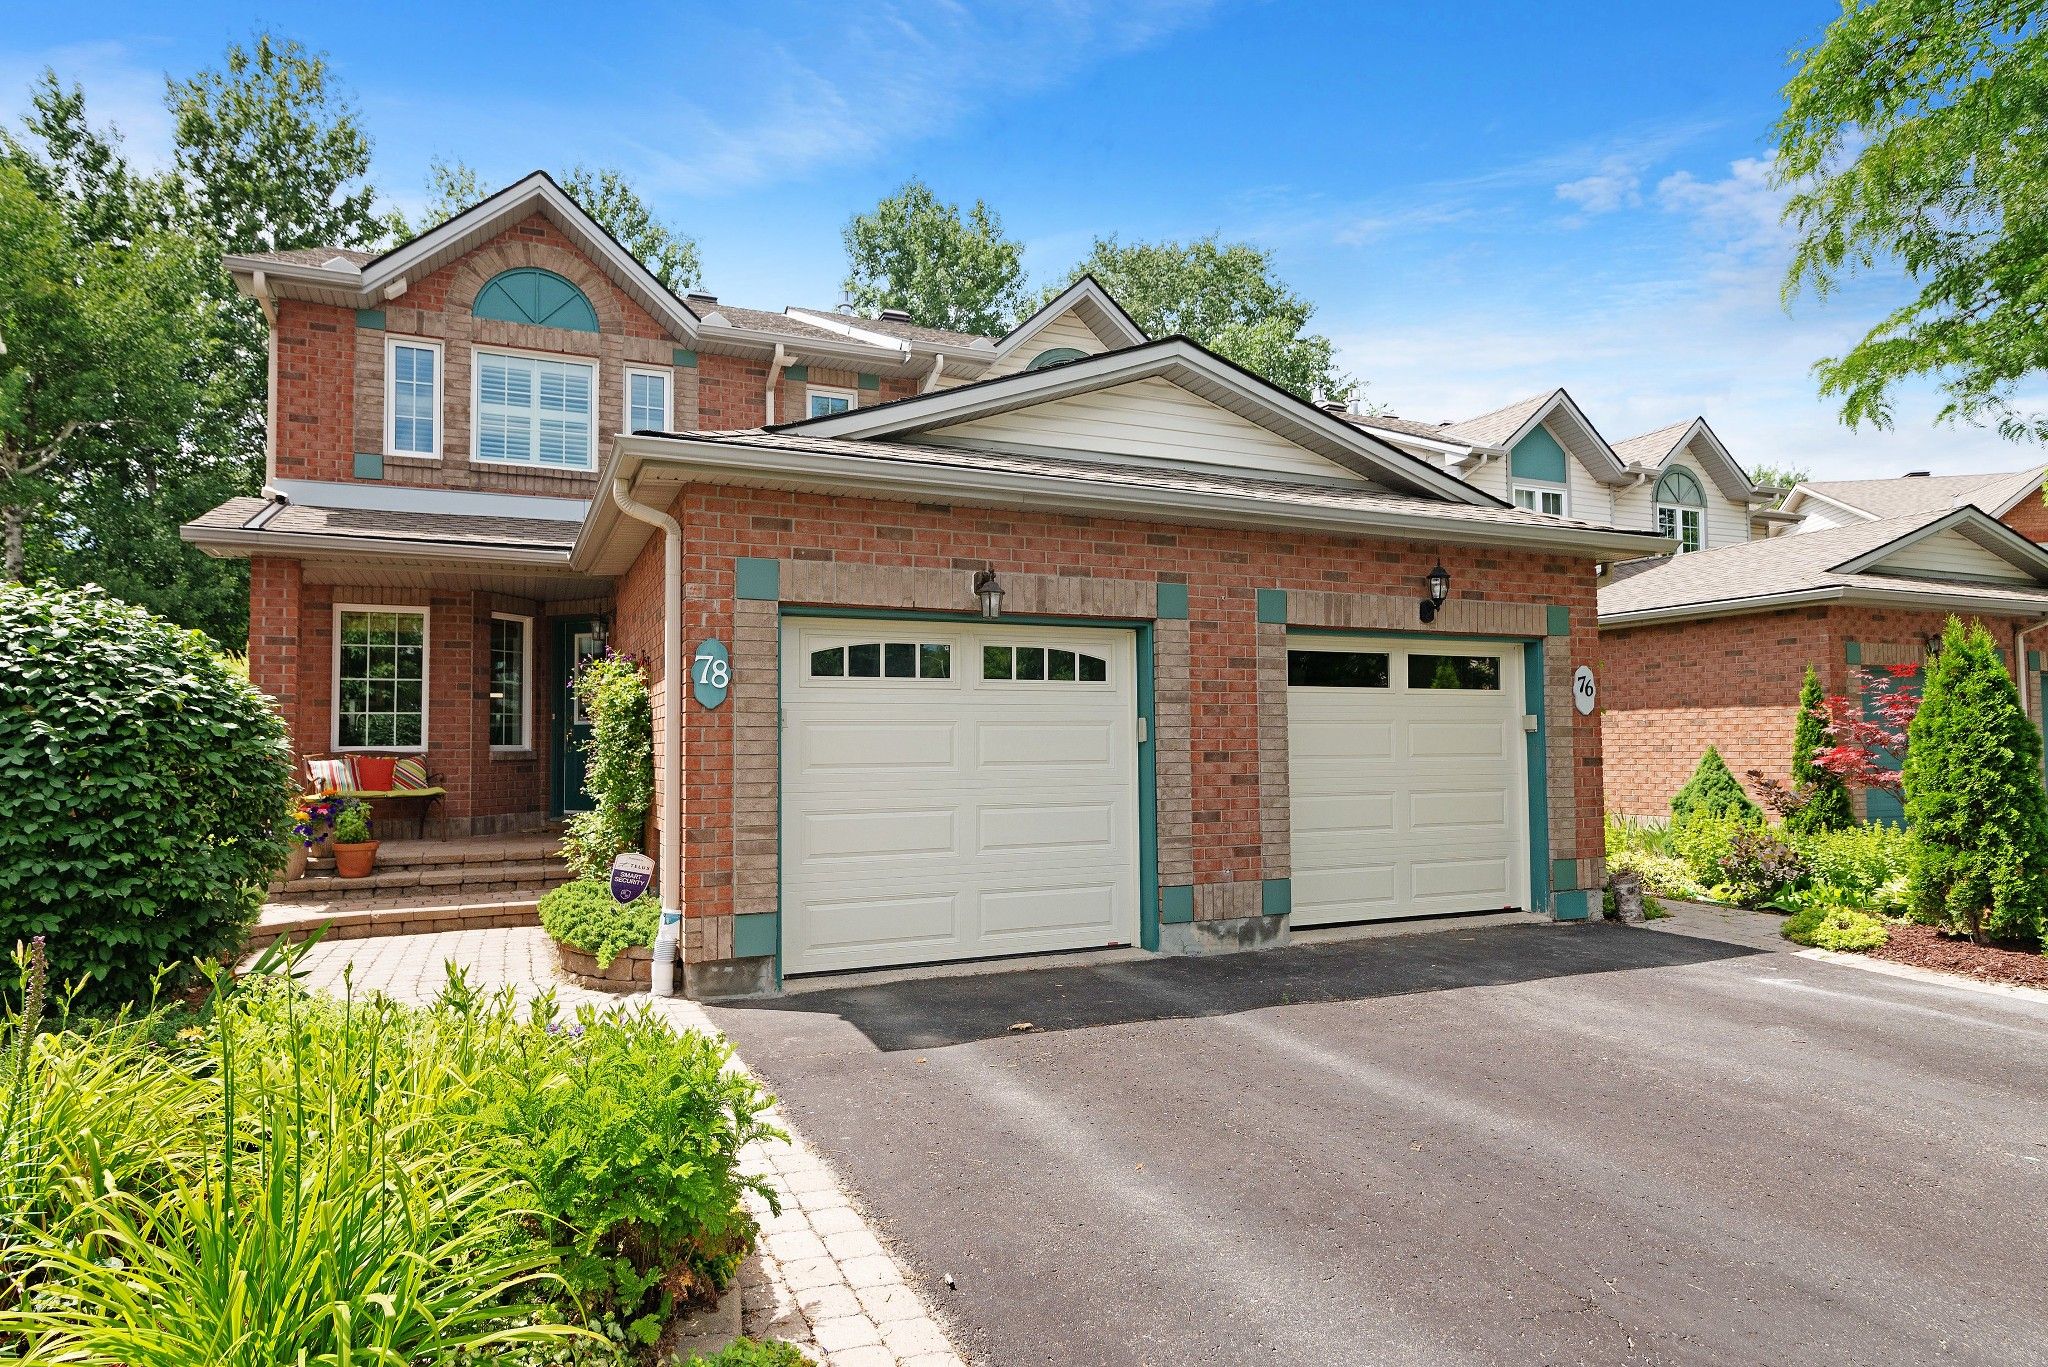 Main Photo: 78 Meadowcroft cr. in Ottawa: House for sale (Carson Meadows)  : MLS®# 1304424